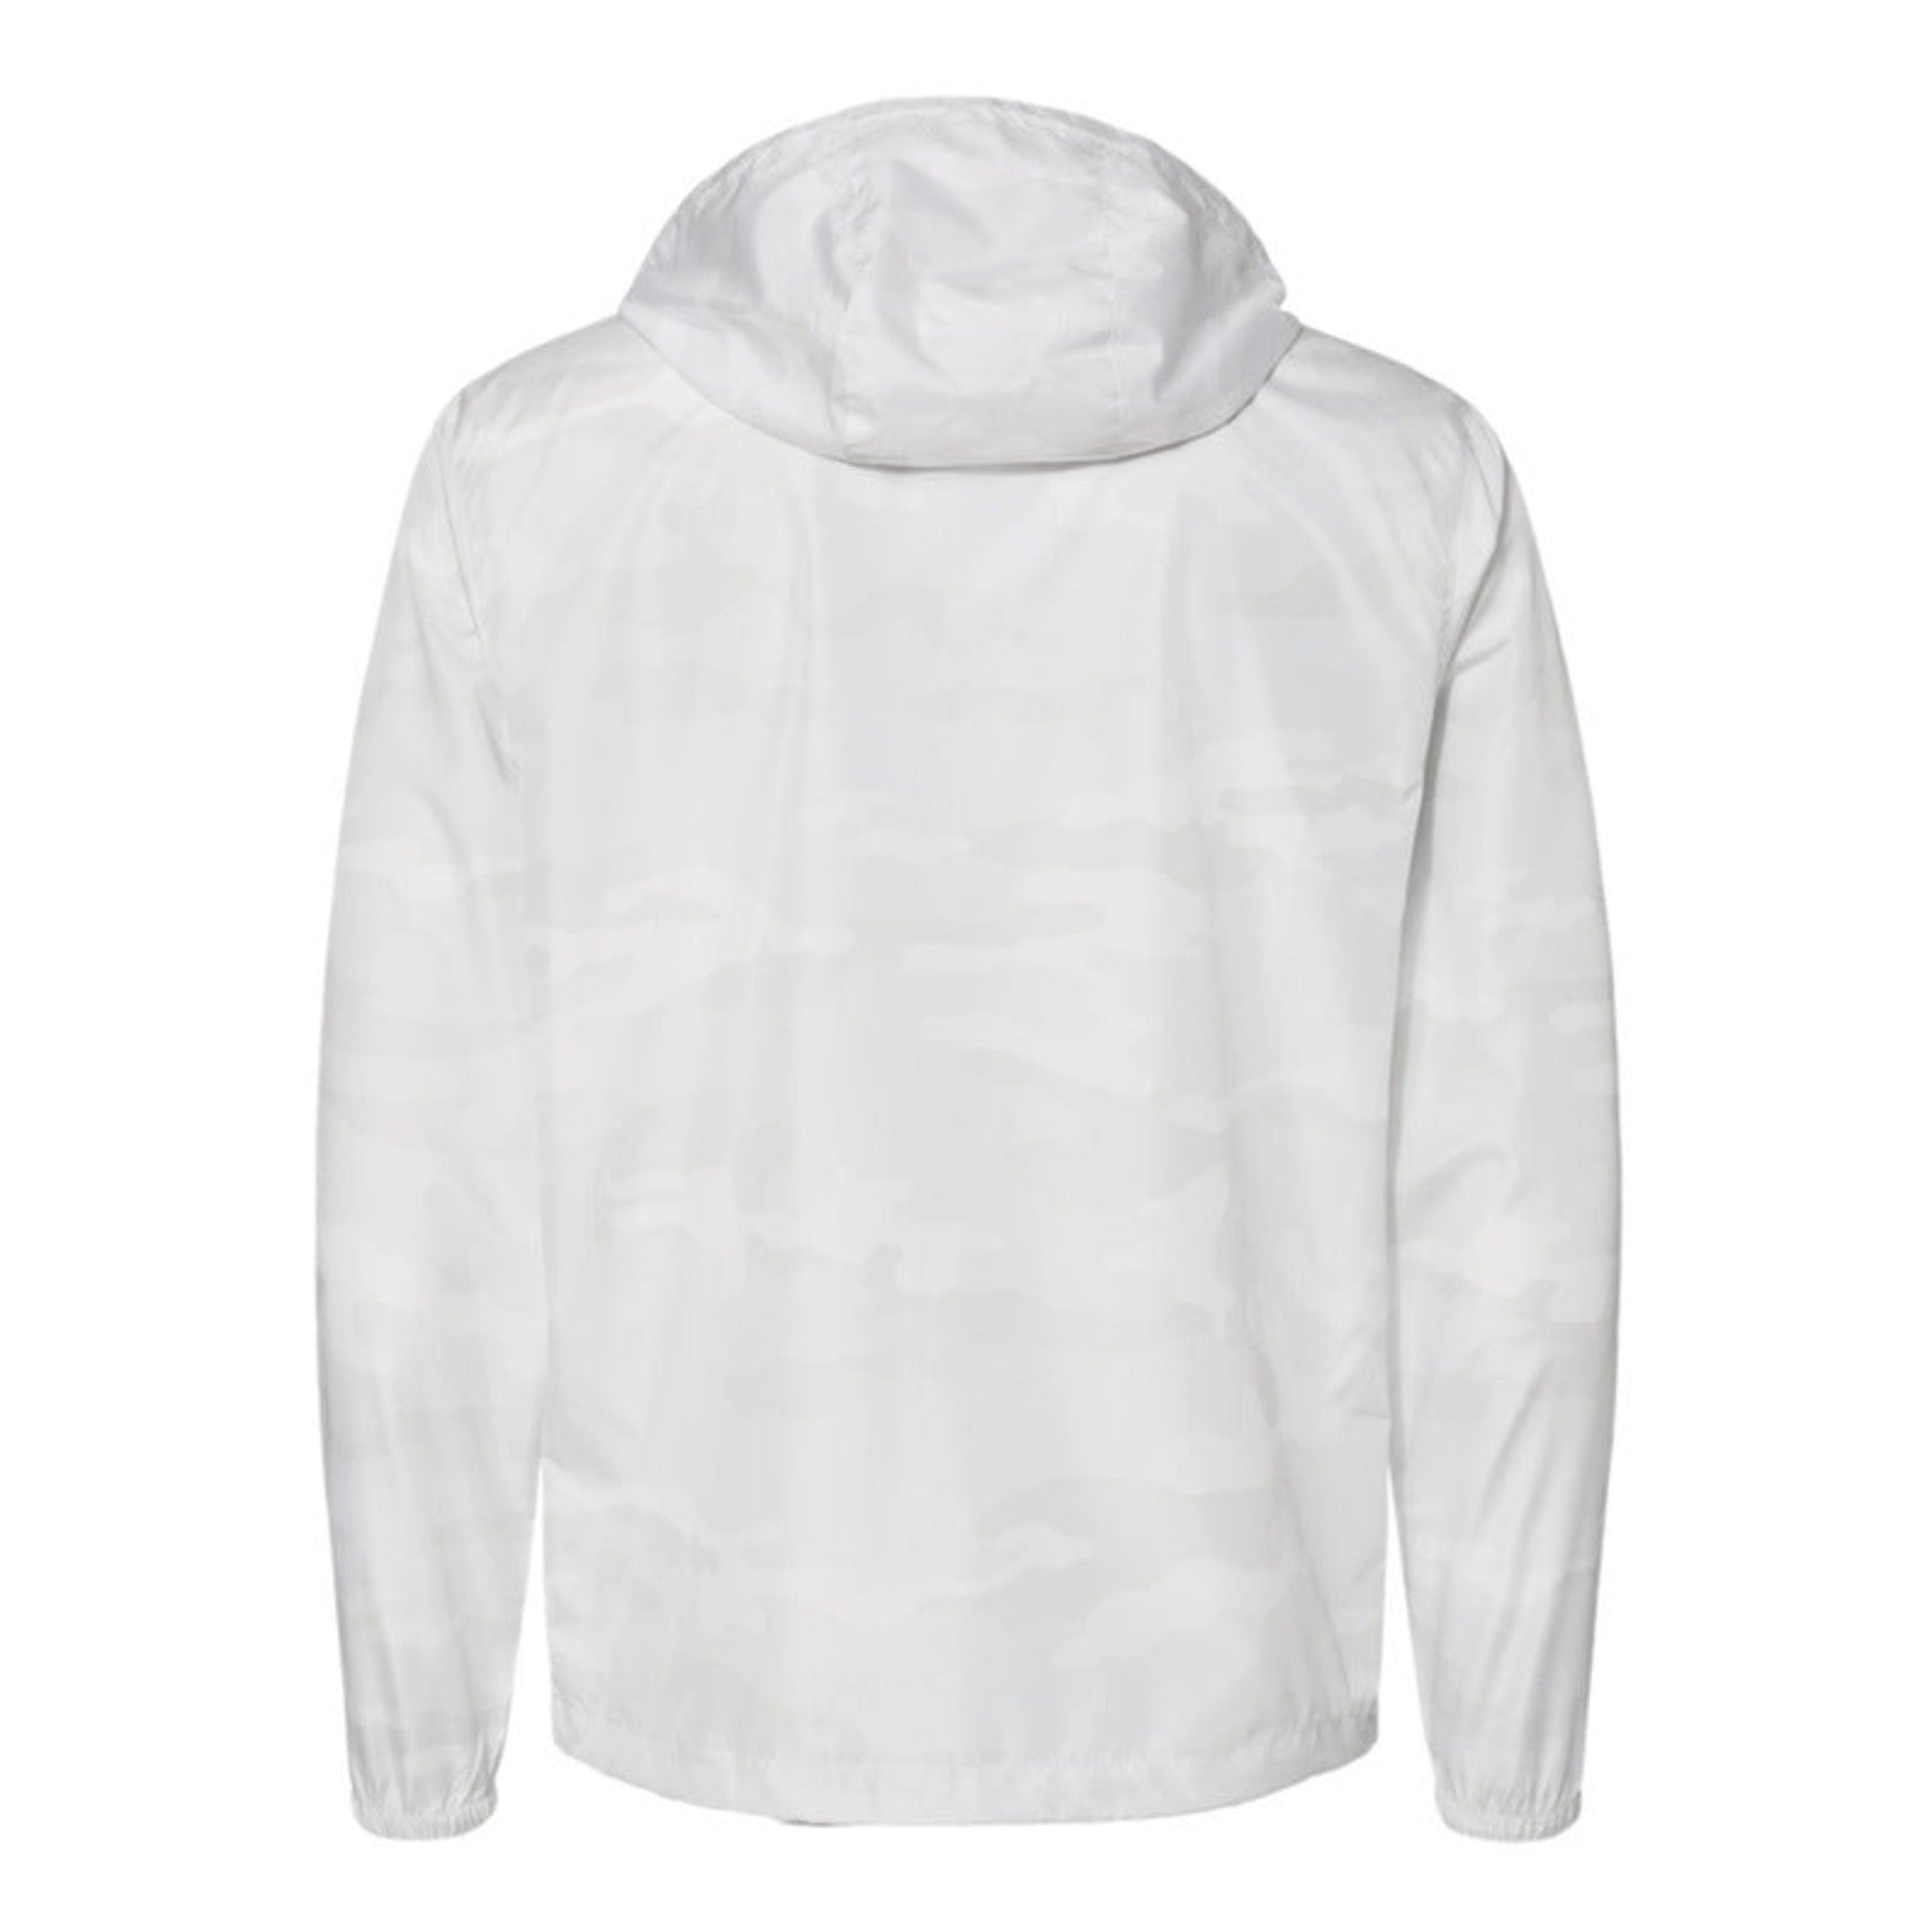 Know Him Basics Logo (White Camo) - Lightweight Windbreaker Full-Zip Jacket